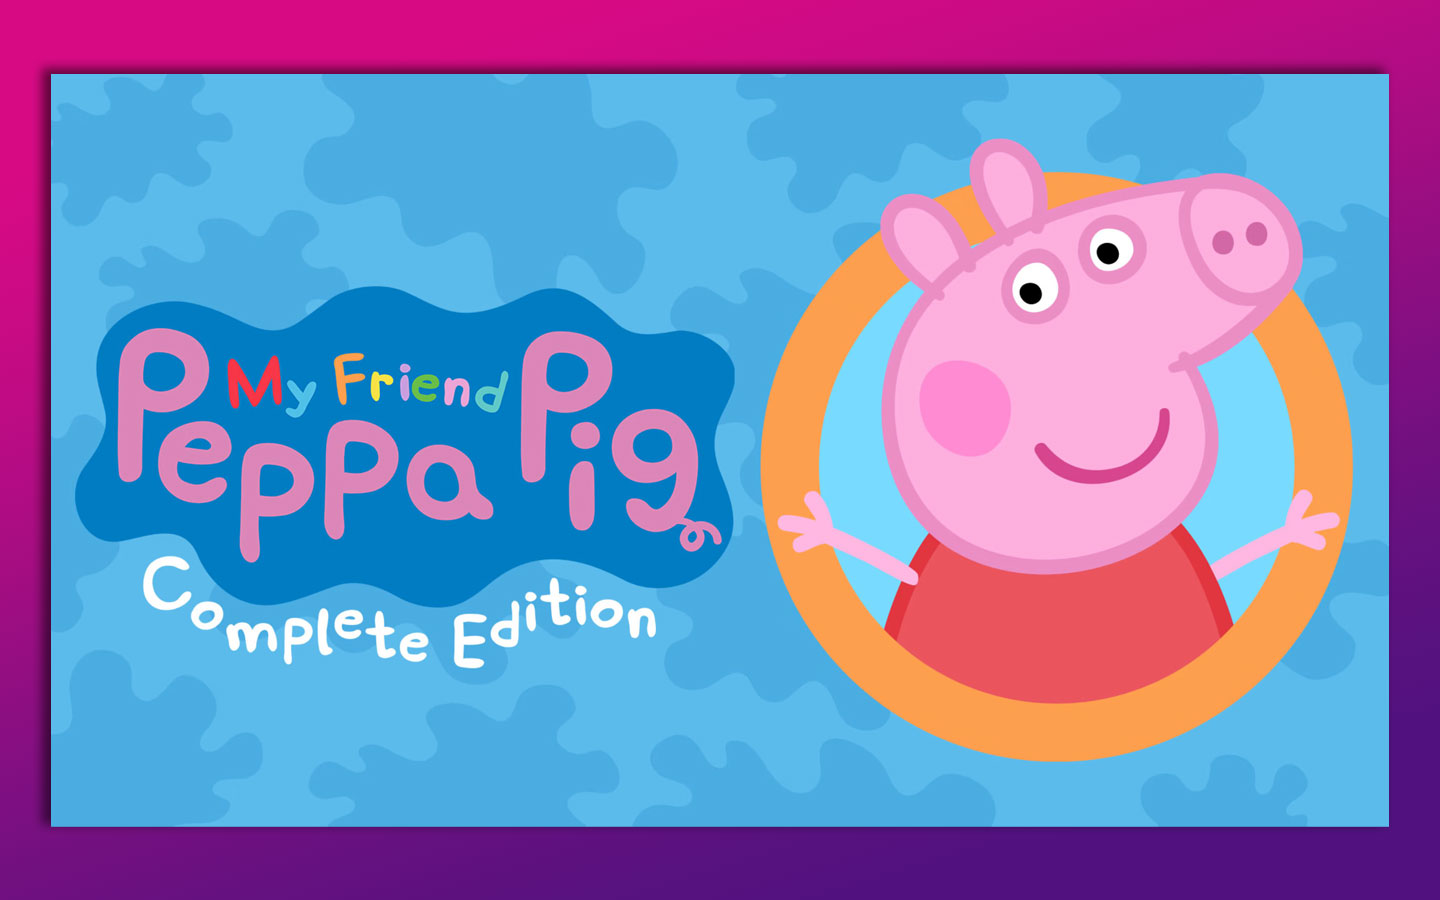 My Friend Peppa Pig on Nintendo Switch